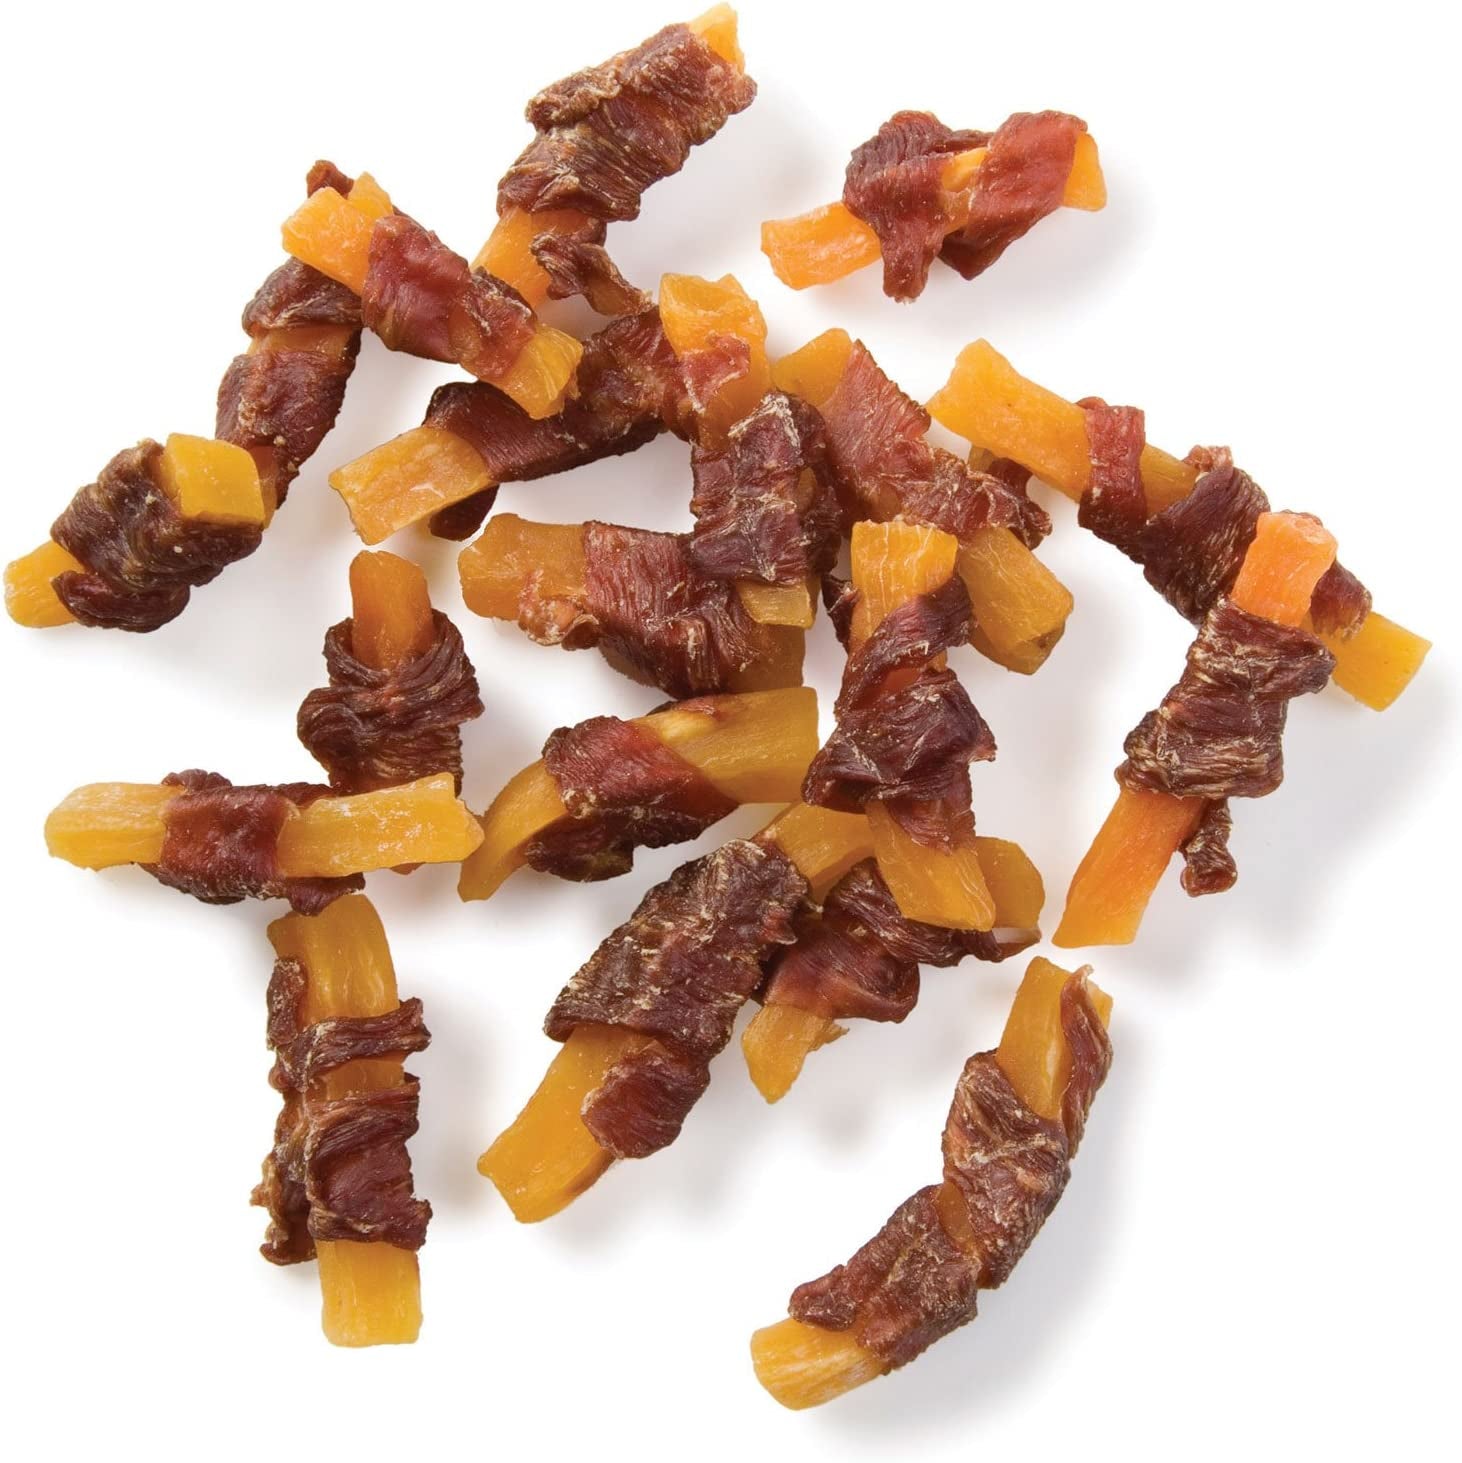 Pet 'N Shape Sweet Potato Chews Jerky Dog Treats - 4 Ounce